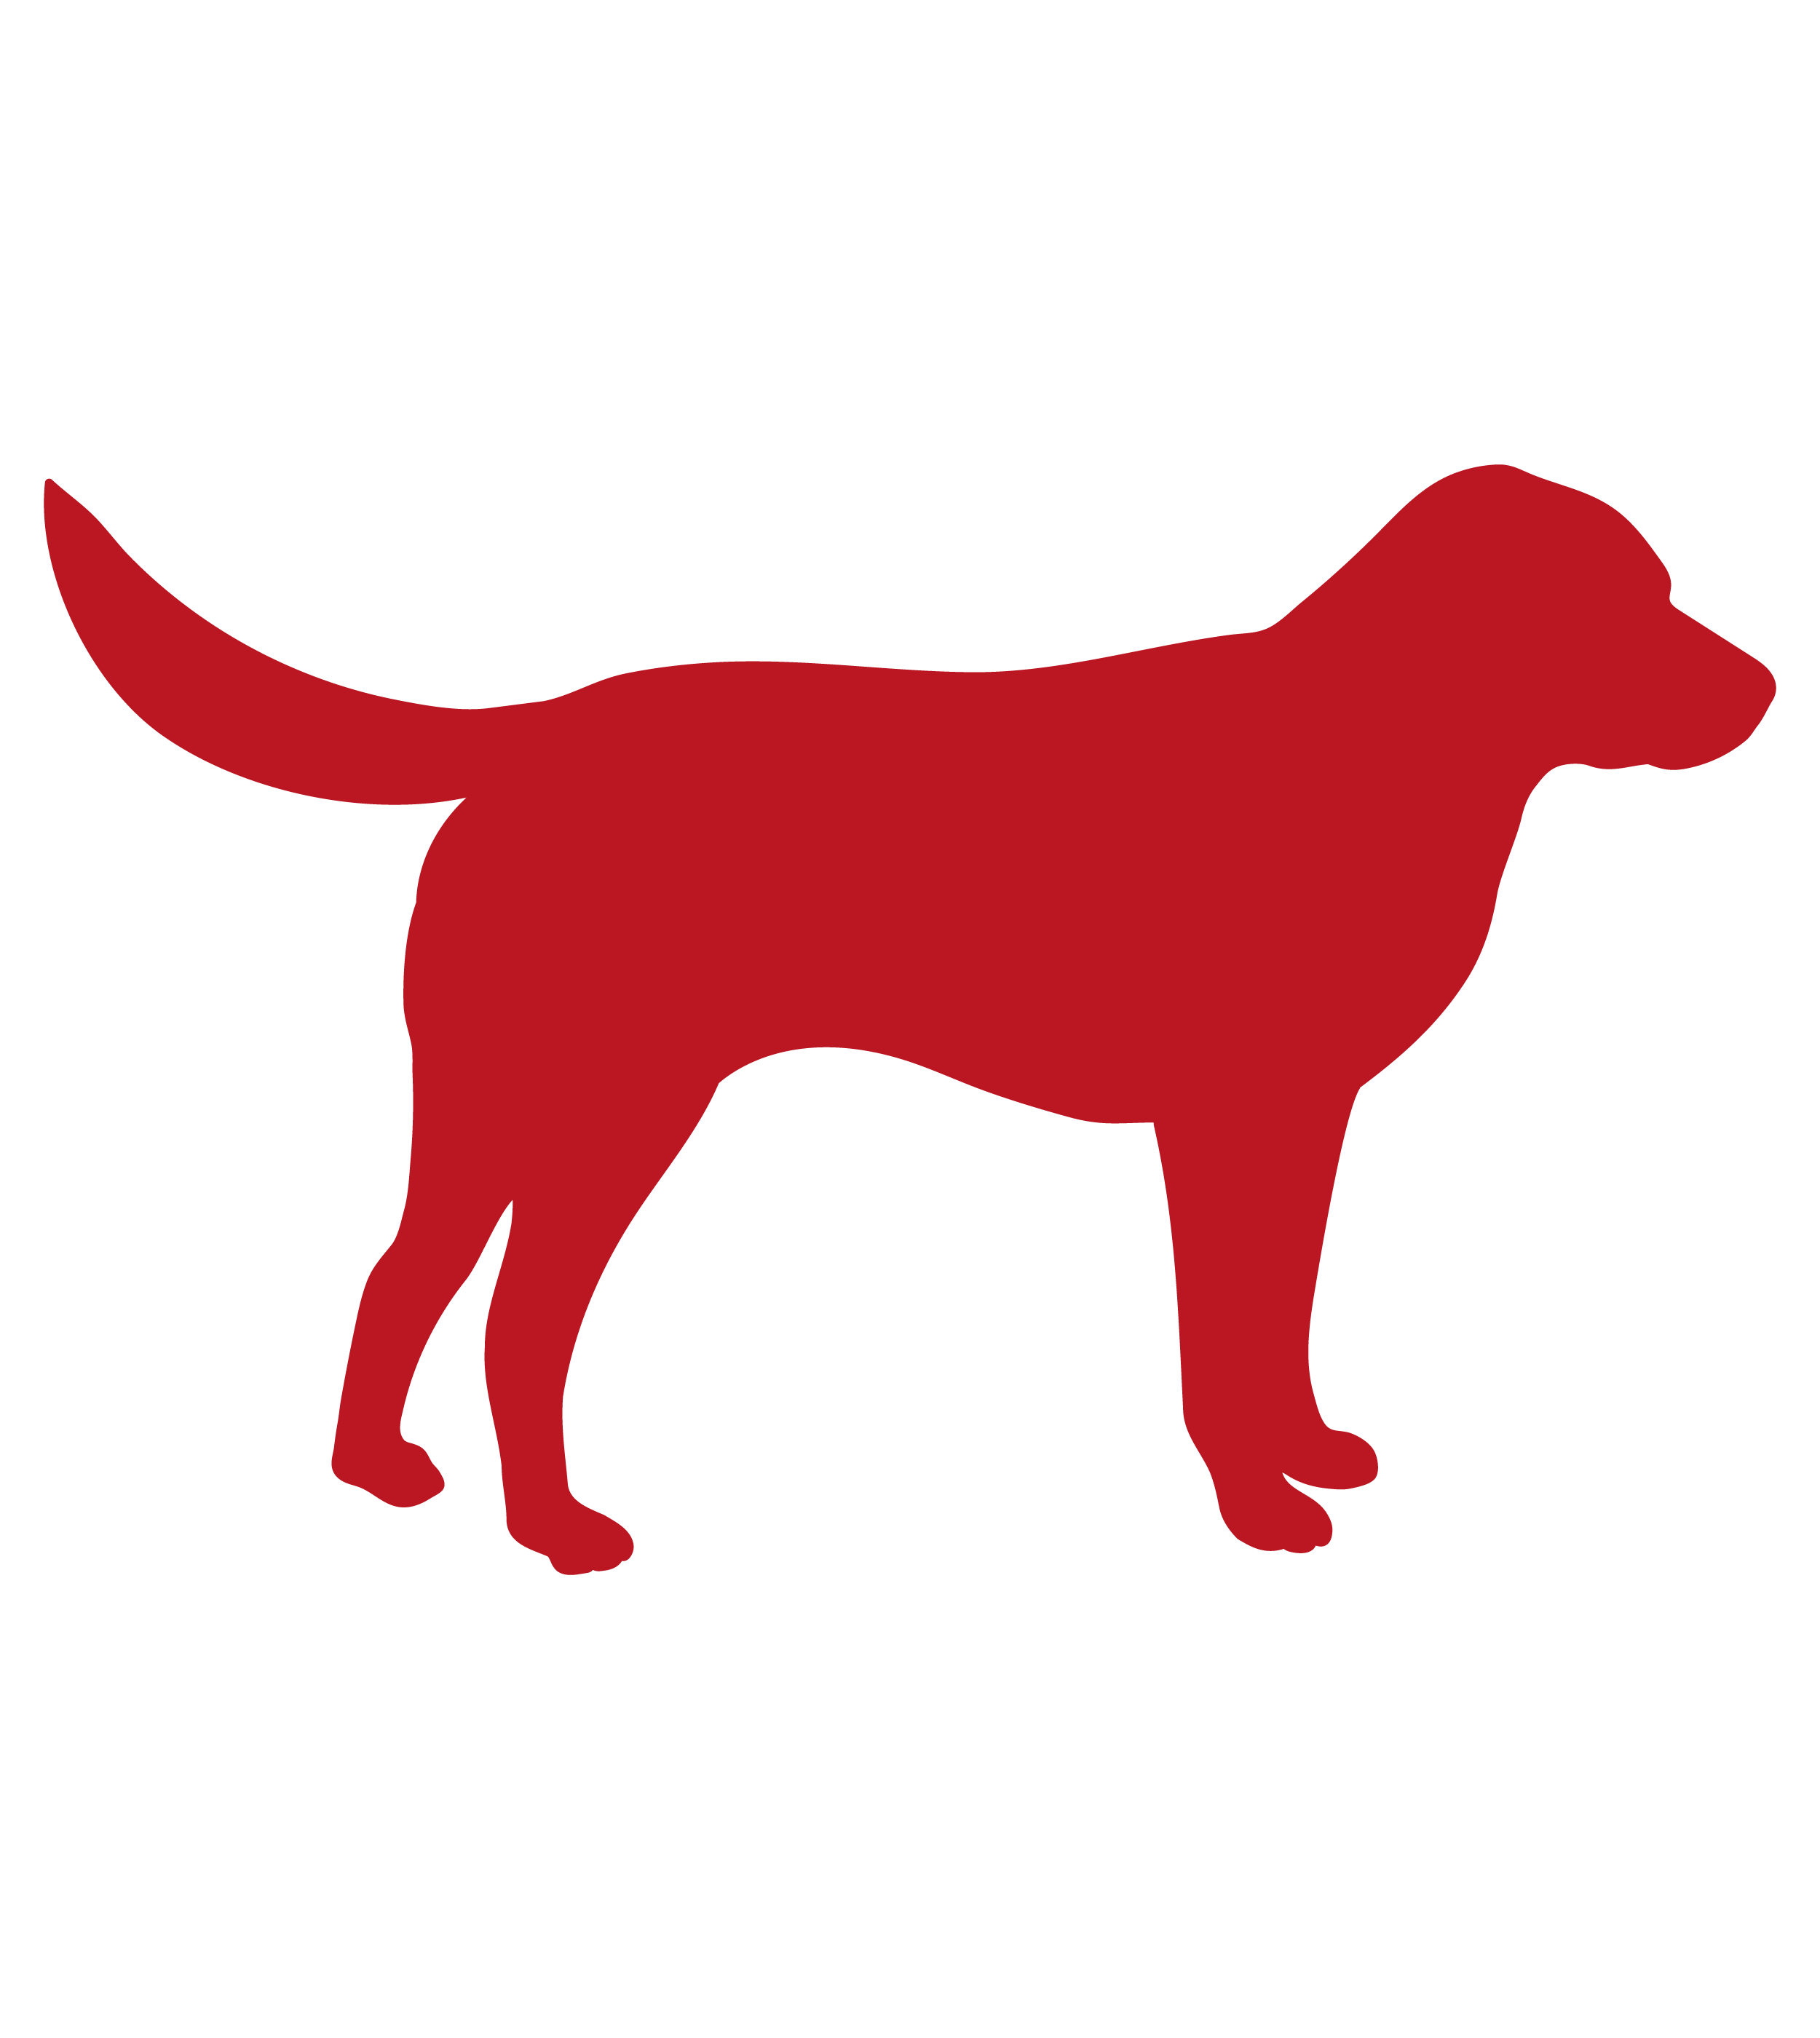 Dog Badge